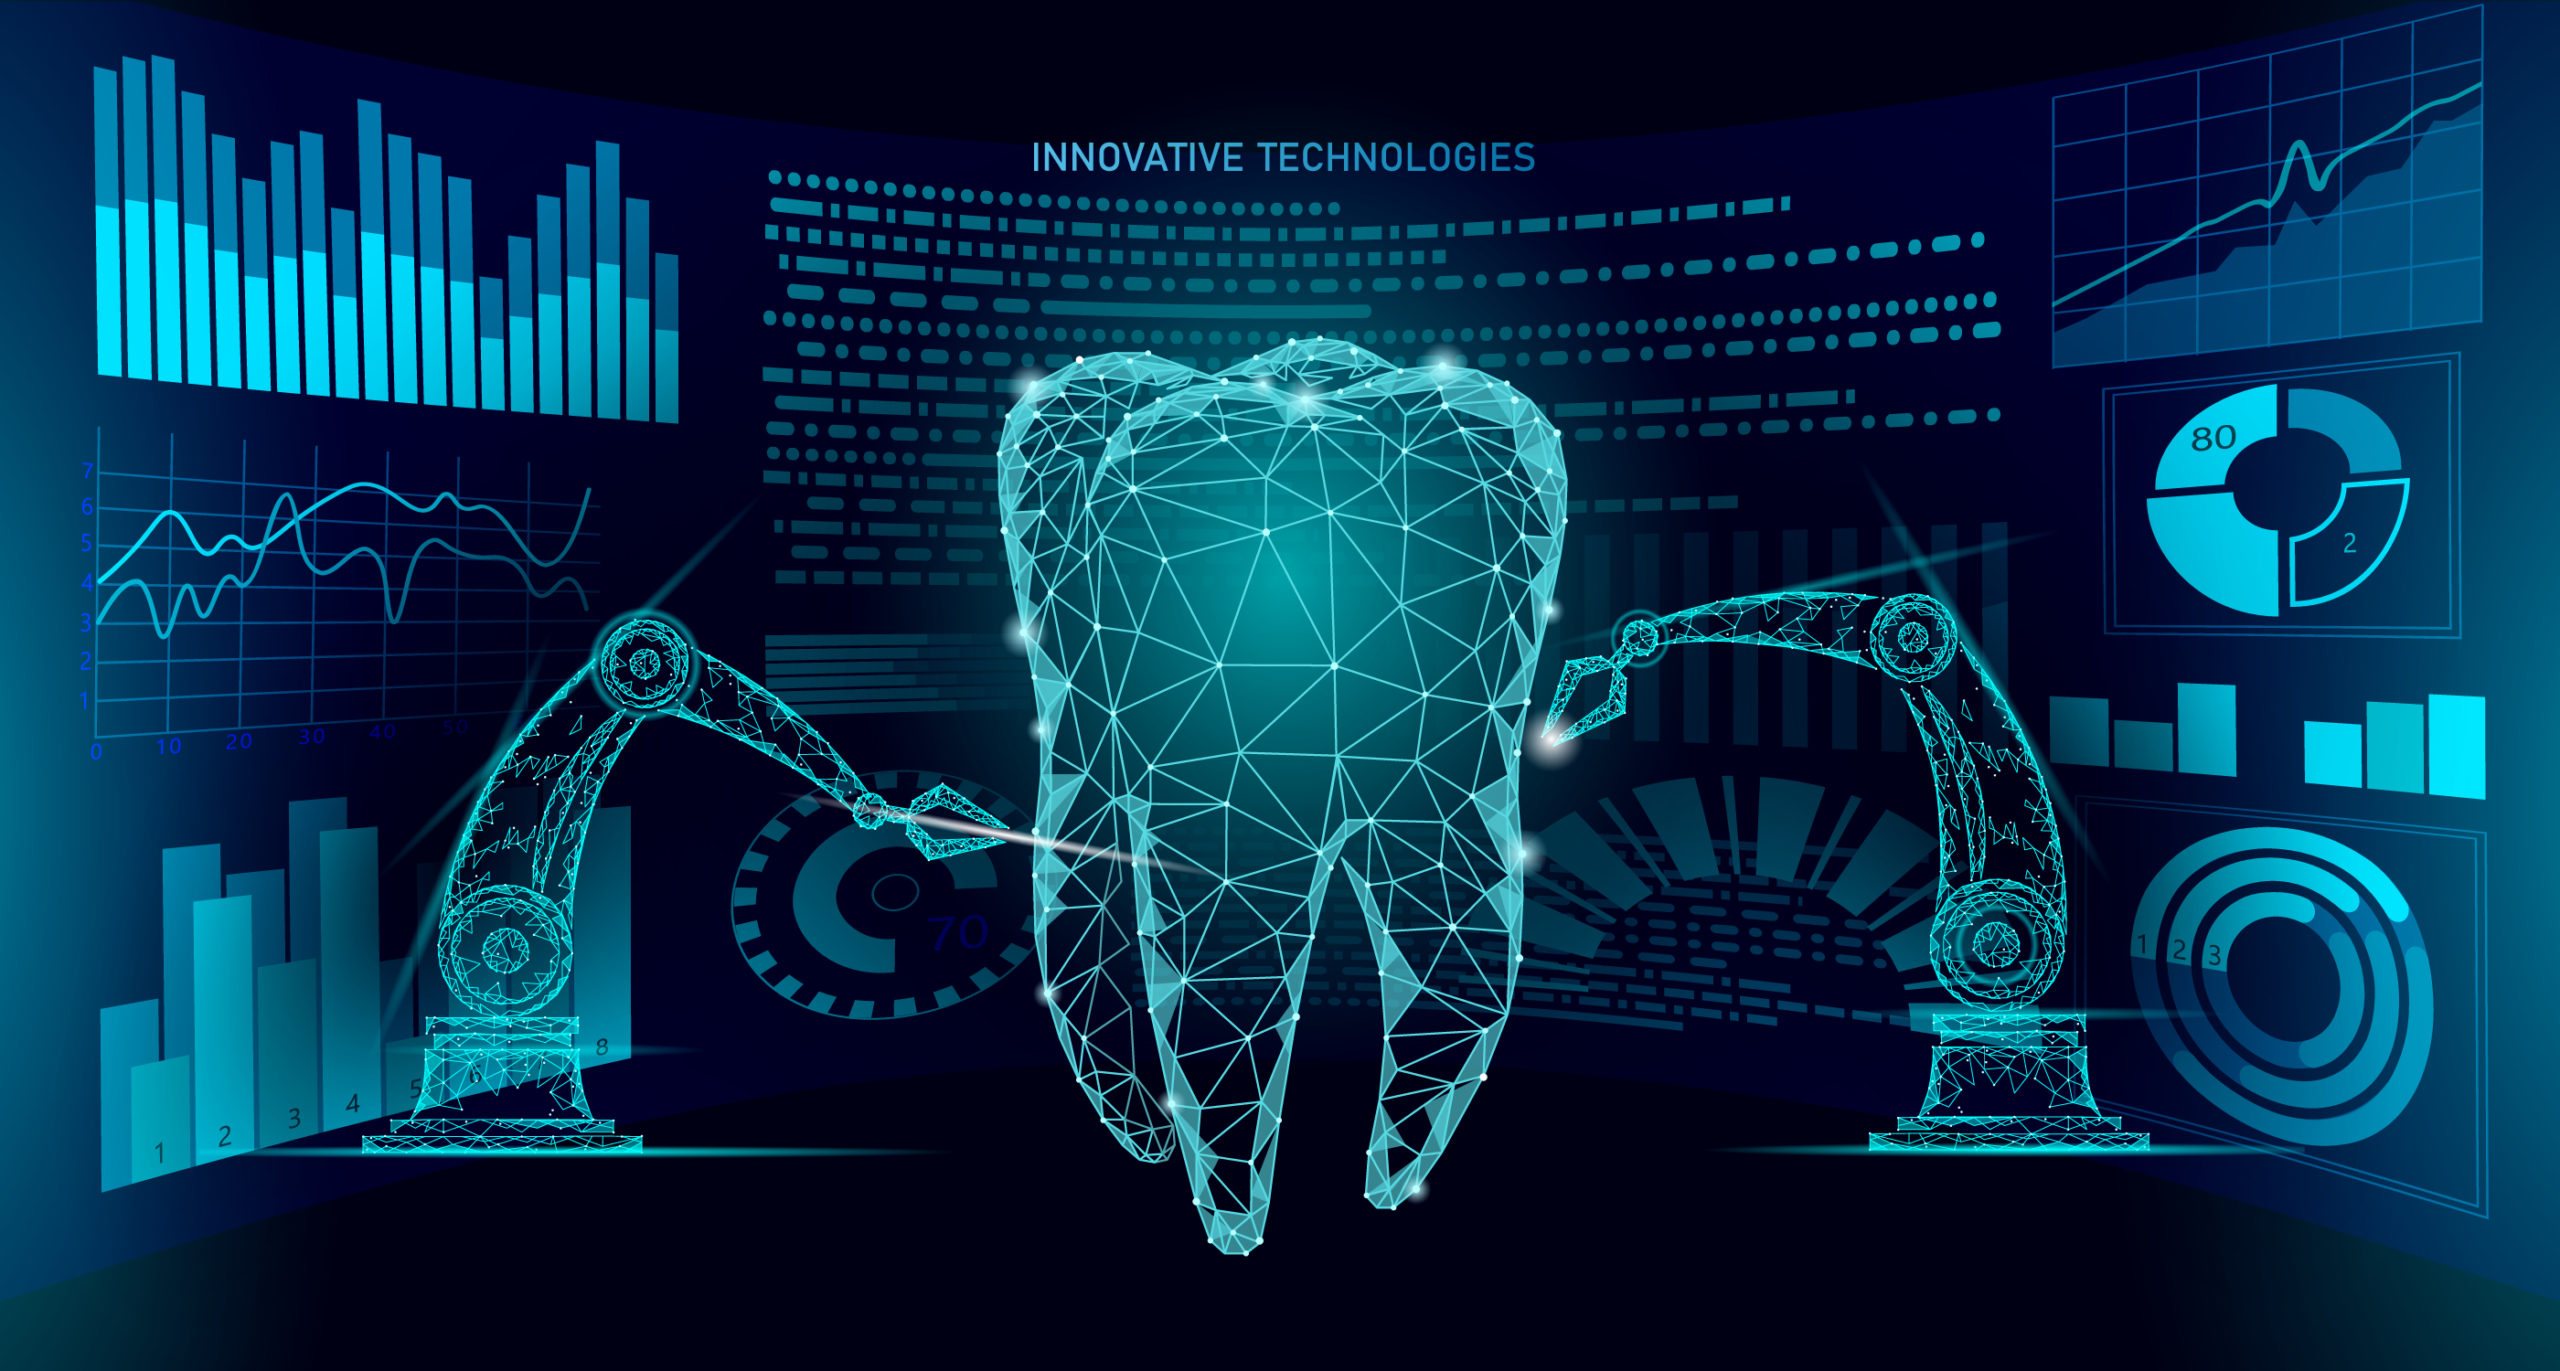 Dental Technology